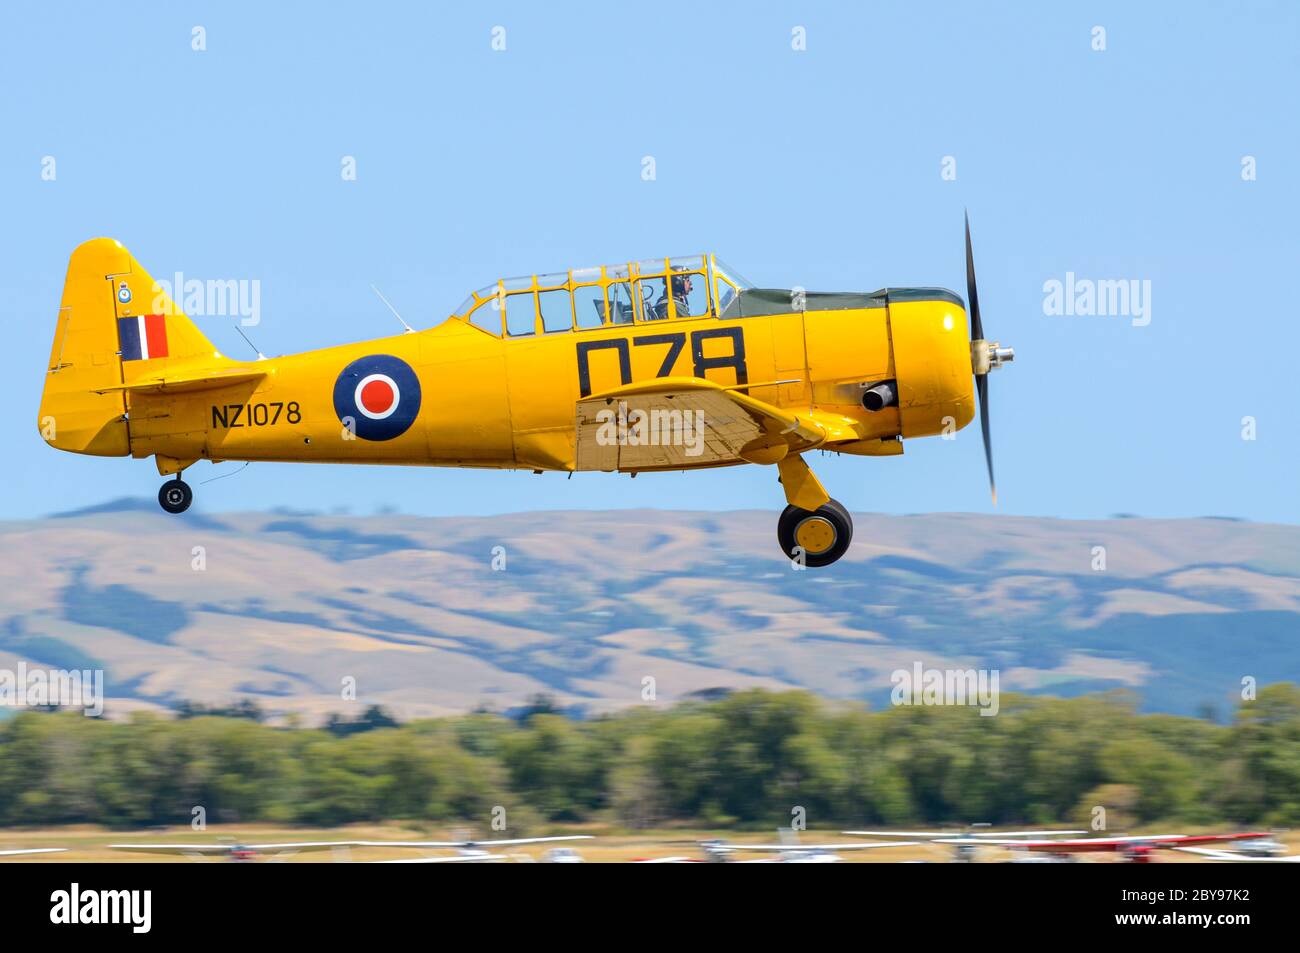 North American T-6 Harvard, Texan Second World War training plane at Wings over Wairarapa airshow, Hood Aerodrome, Masterton, New Zealand. RAF yellow Stock Photo